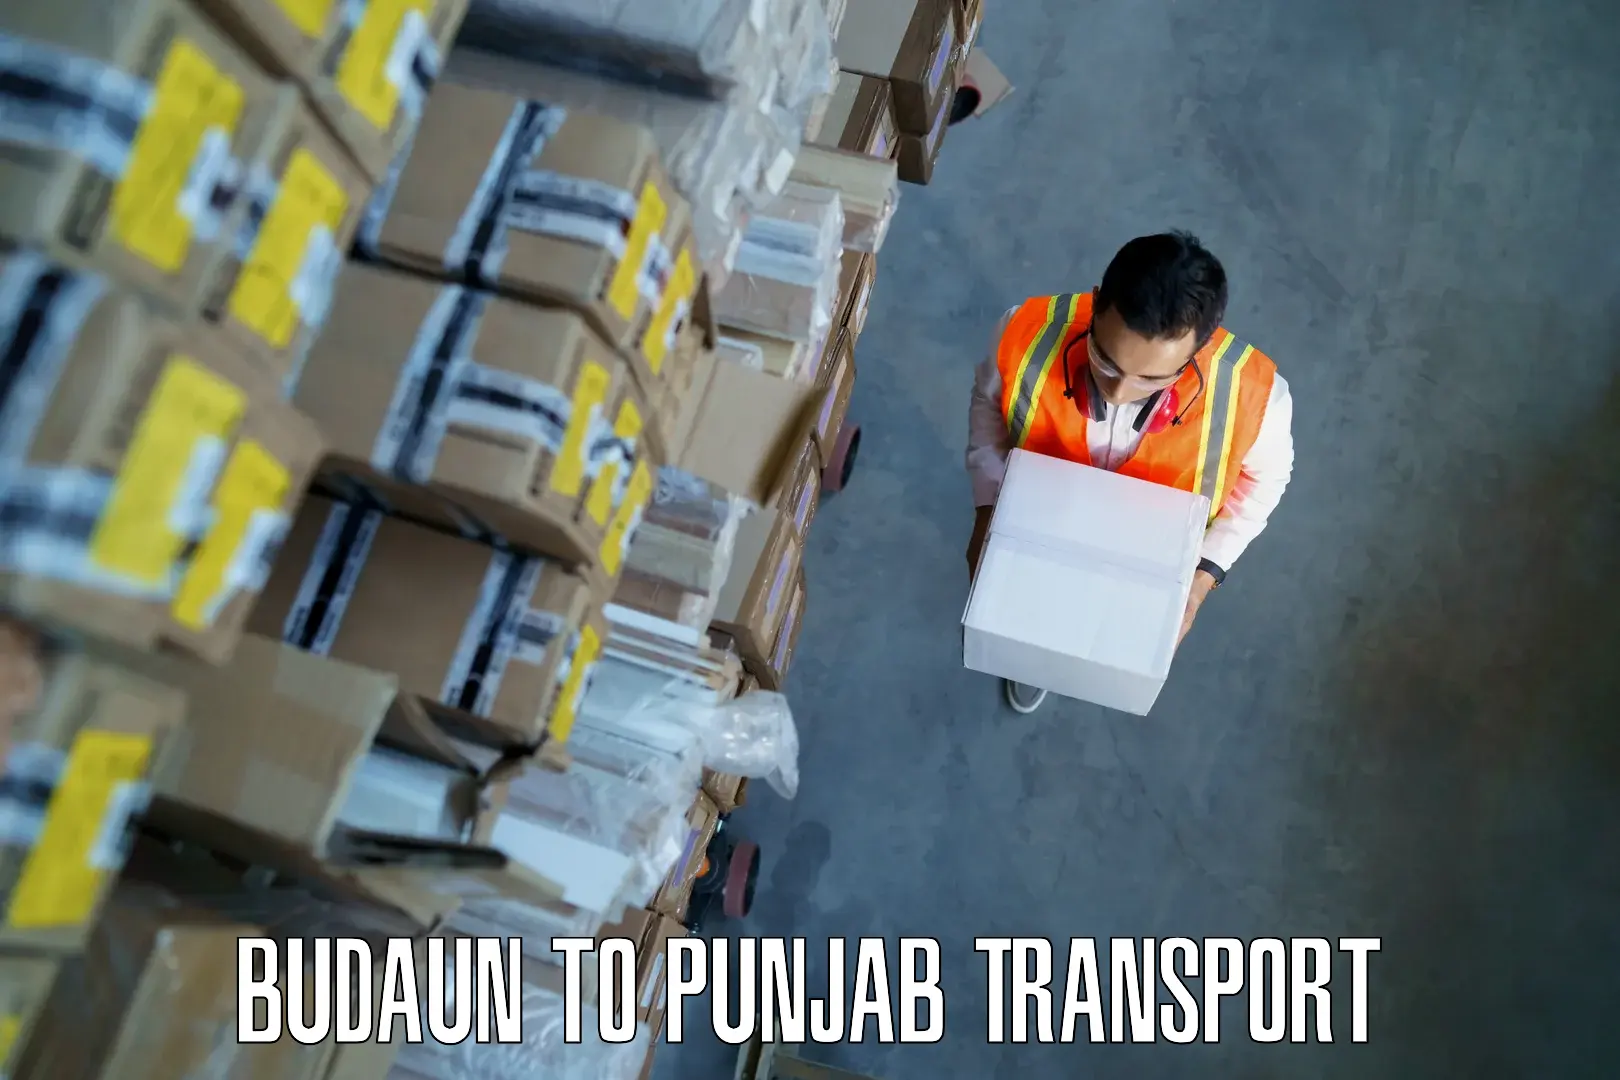 Delivery service Budaun to Punjab